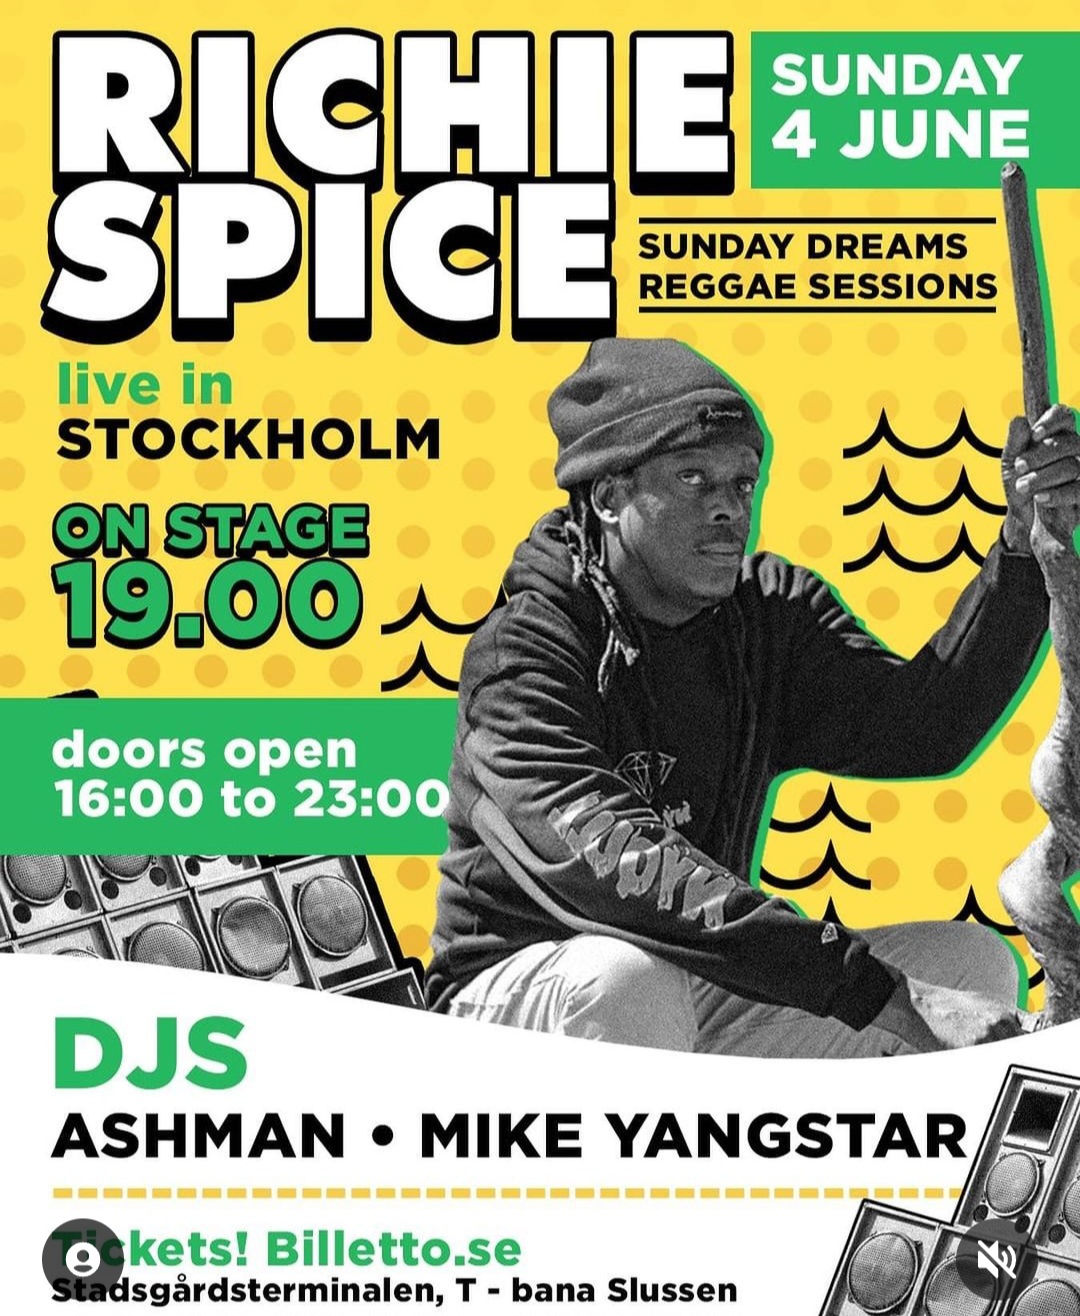 KLUBBGIG! Richie Spice live! (STOCKHOLM)